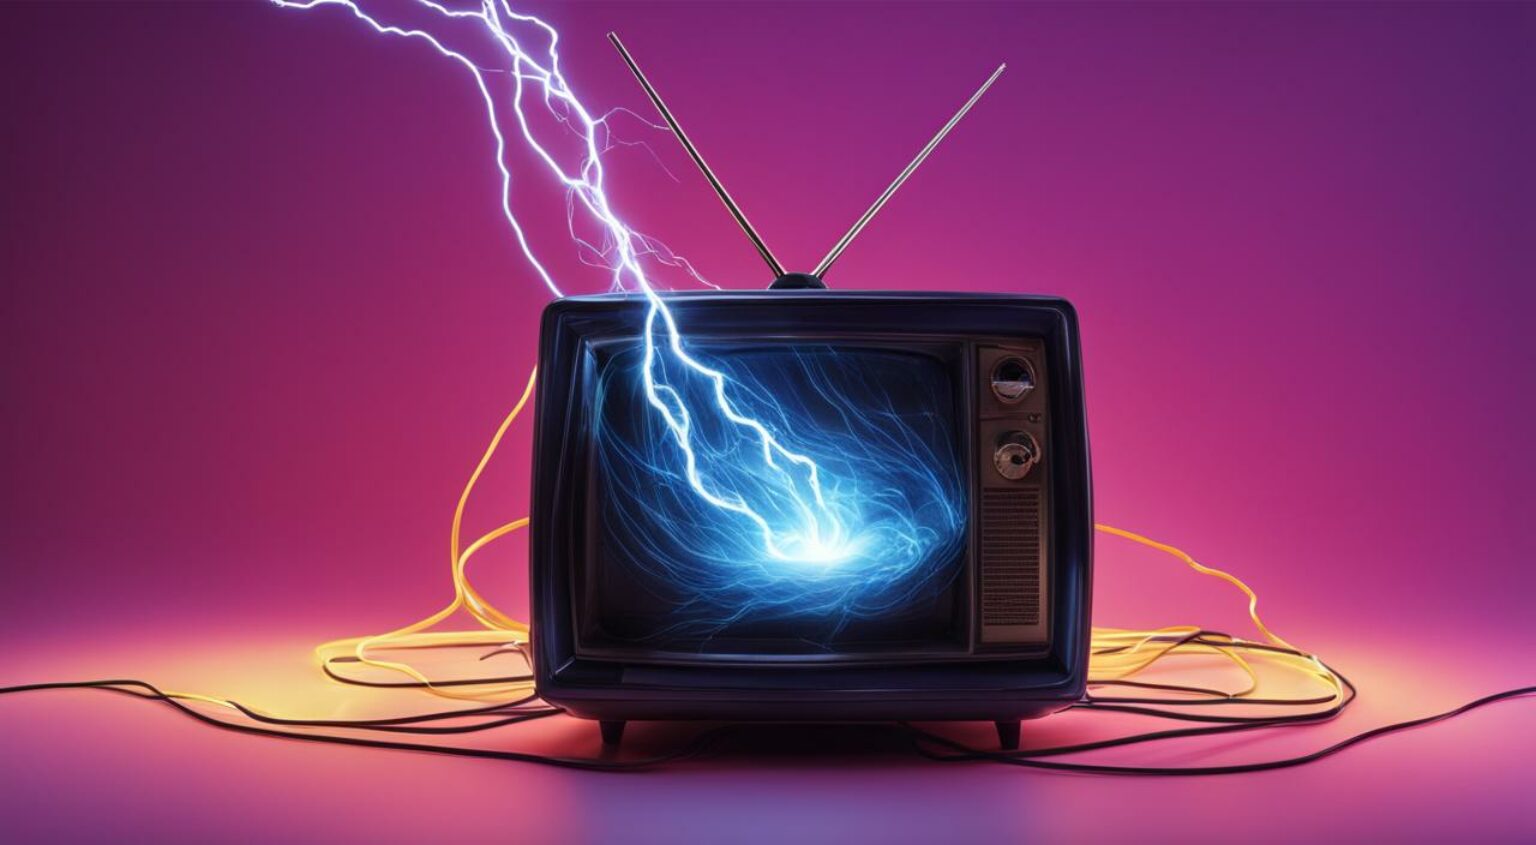 televisão gasta energia